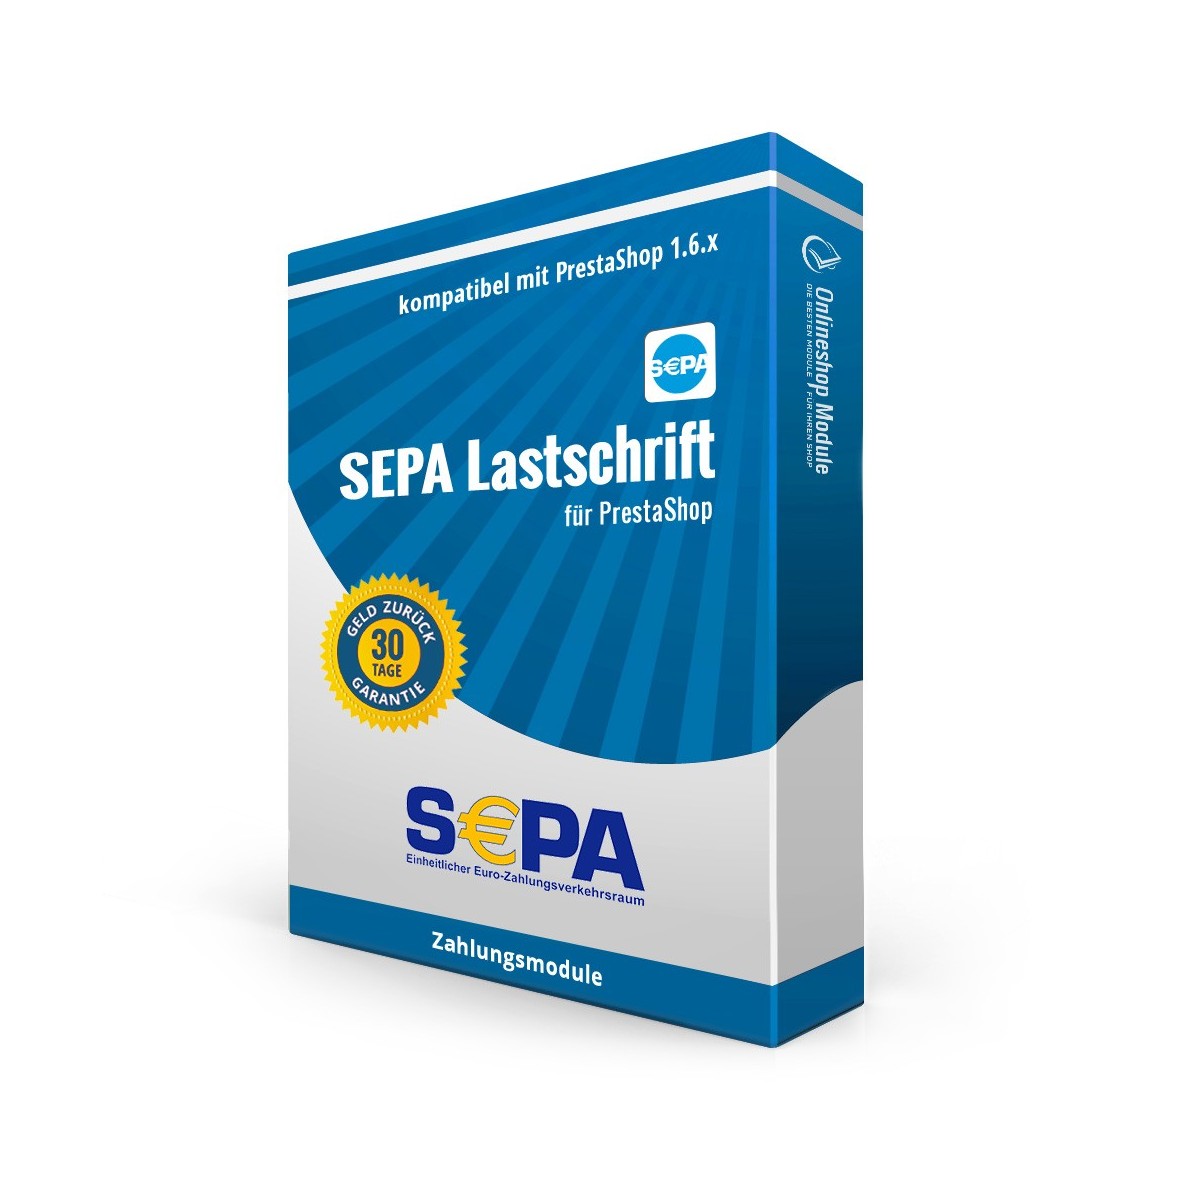 SEPA Lastschrift möbile Zahlungsauswahl /Smartphone & Tablet